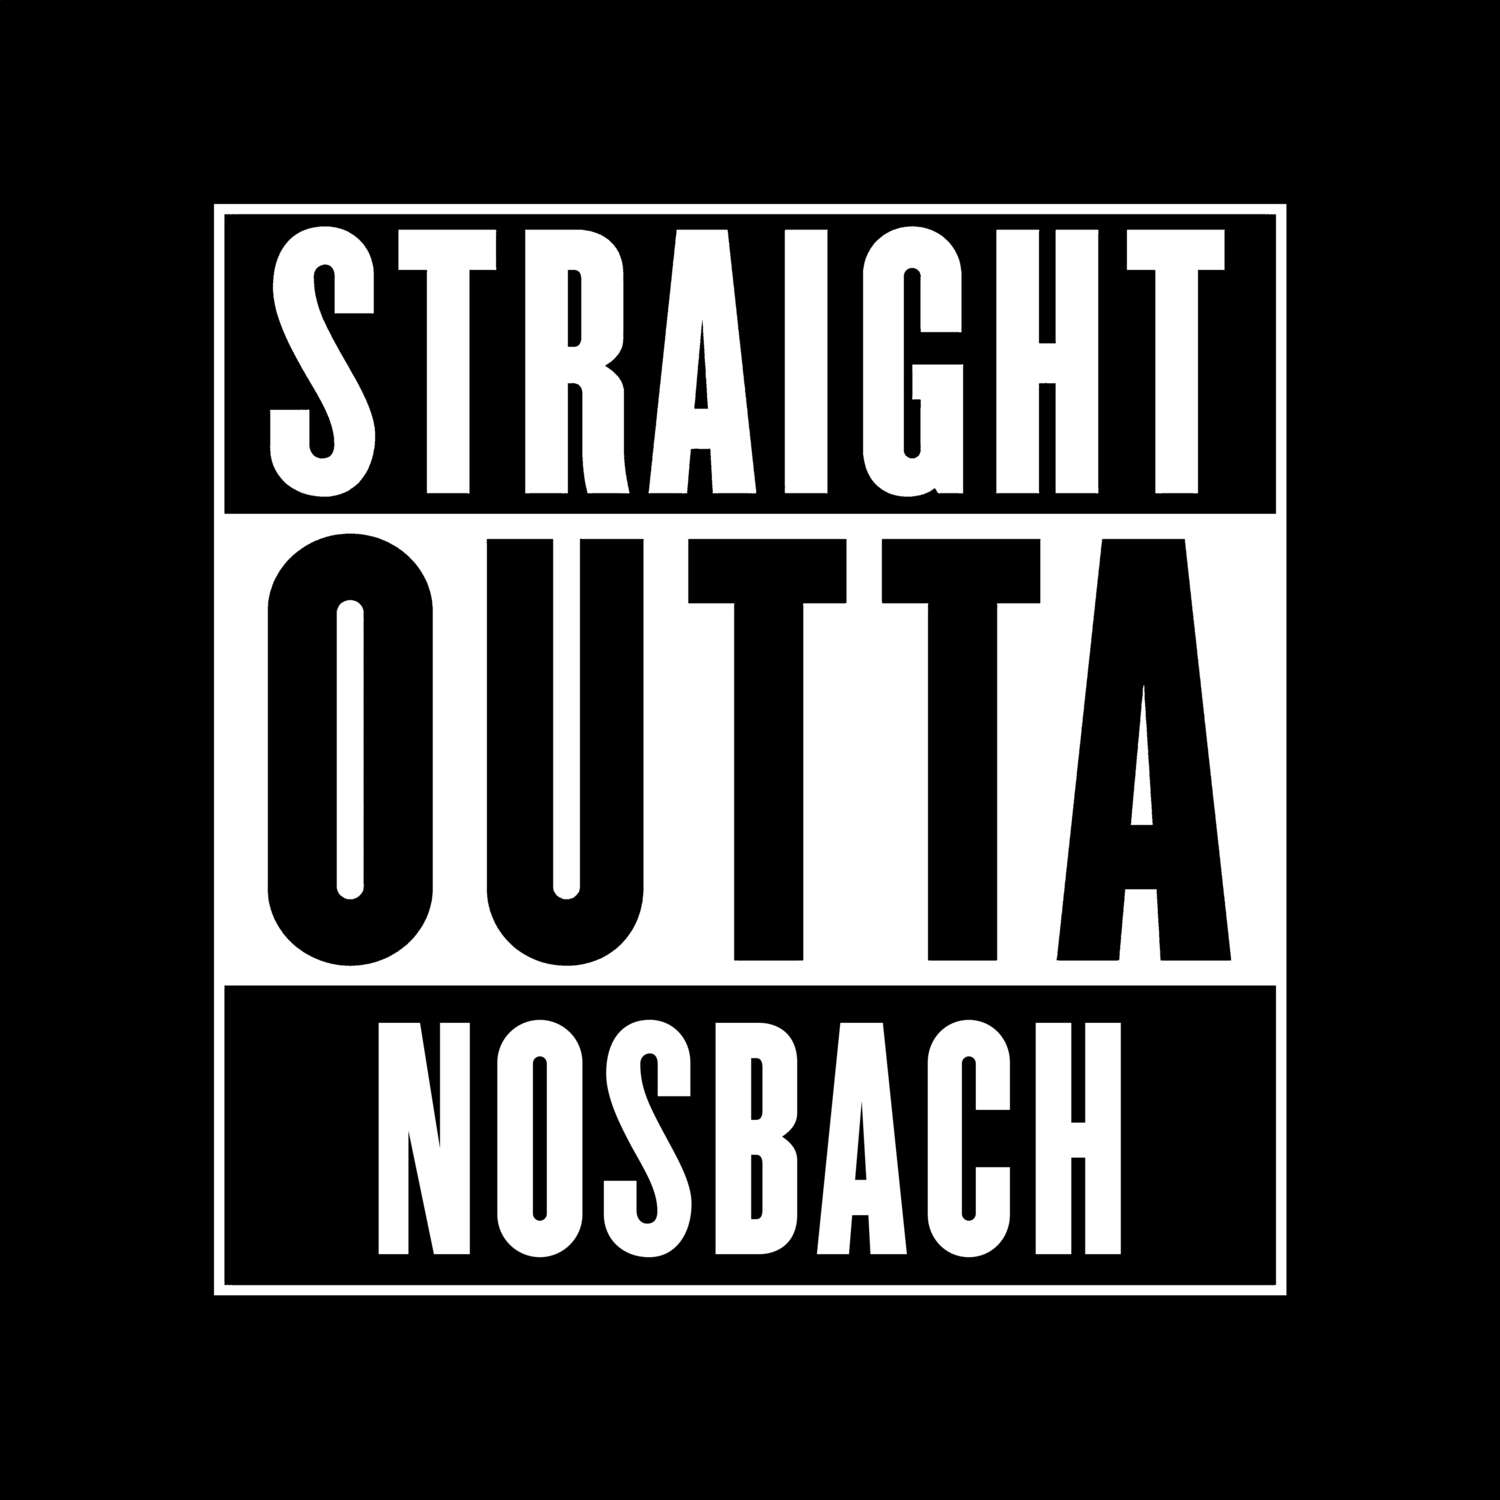 Nosbach T-Shirt »Straight Outta«